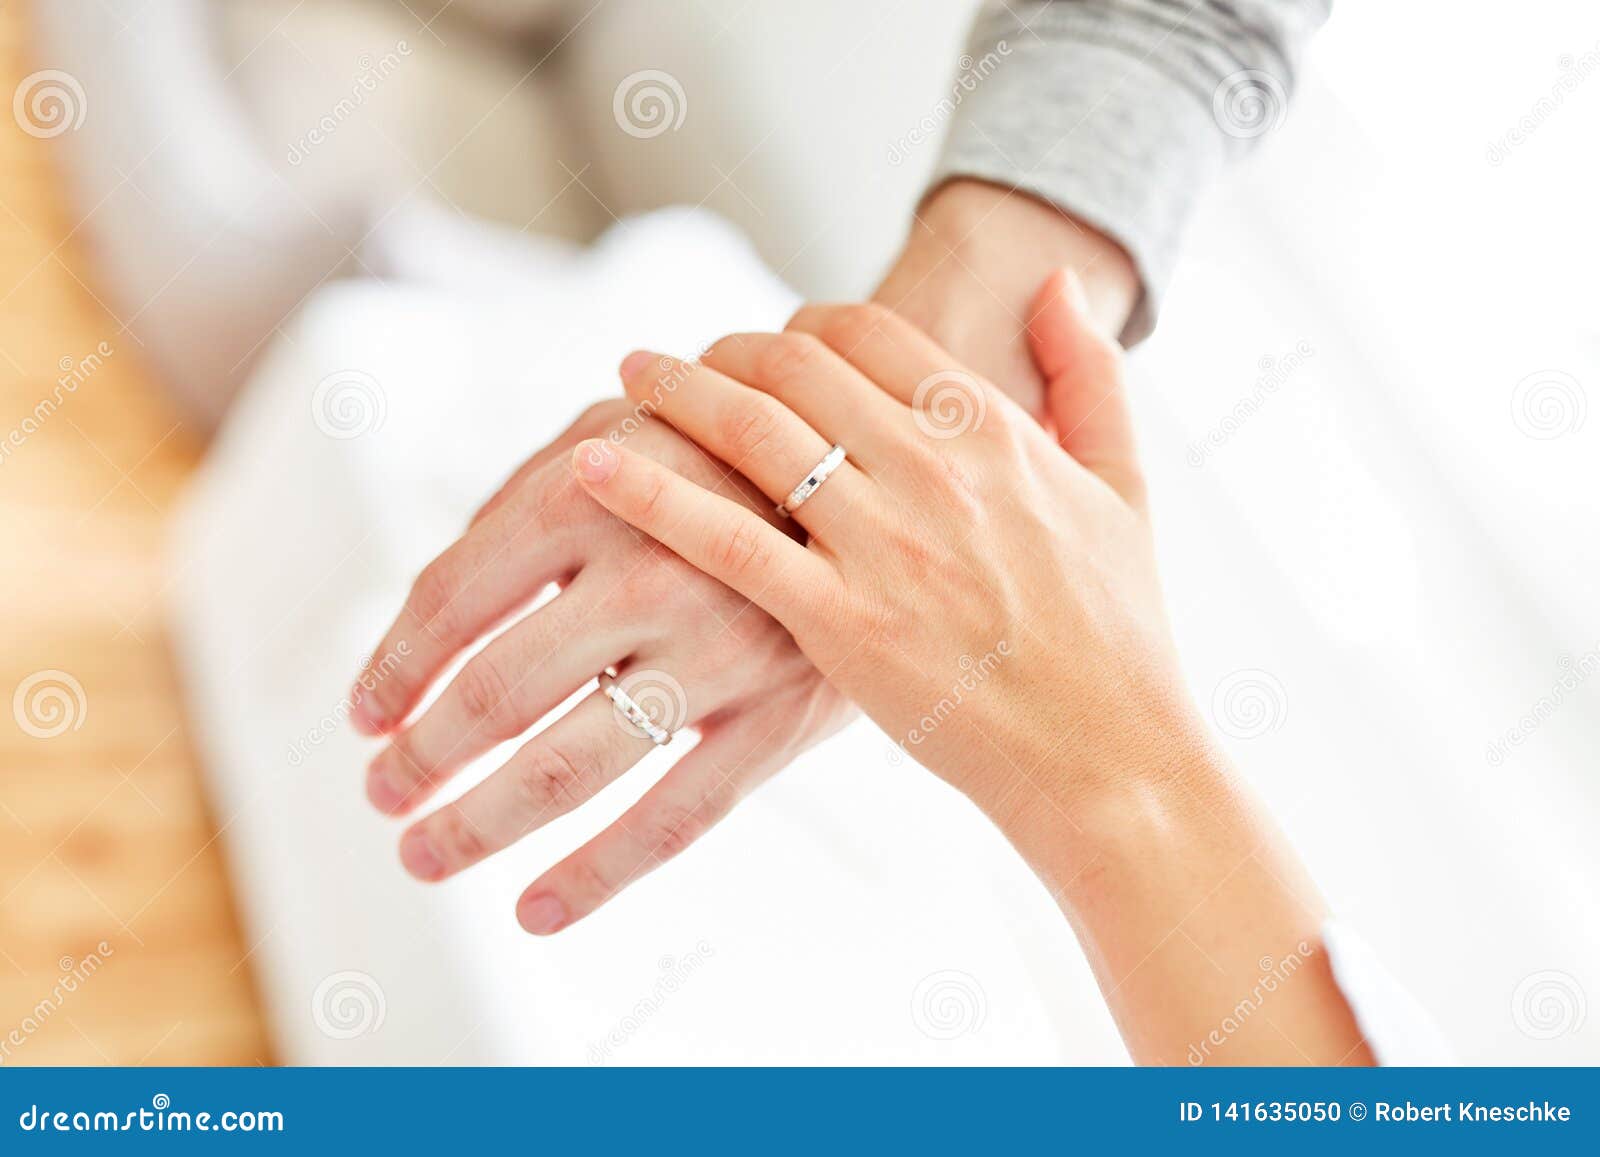 Wedding ring - Wikipedia